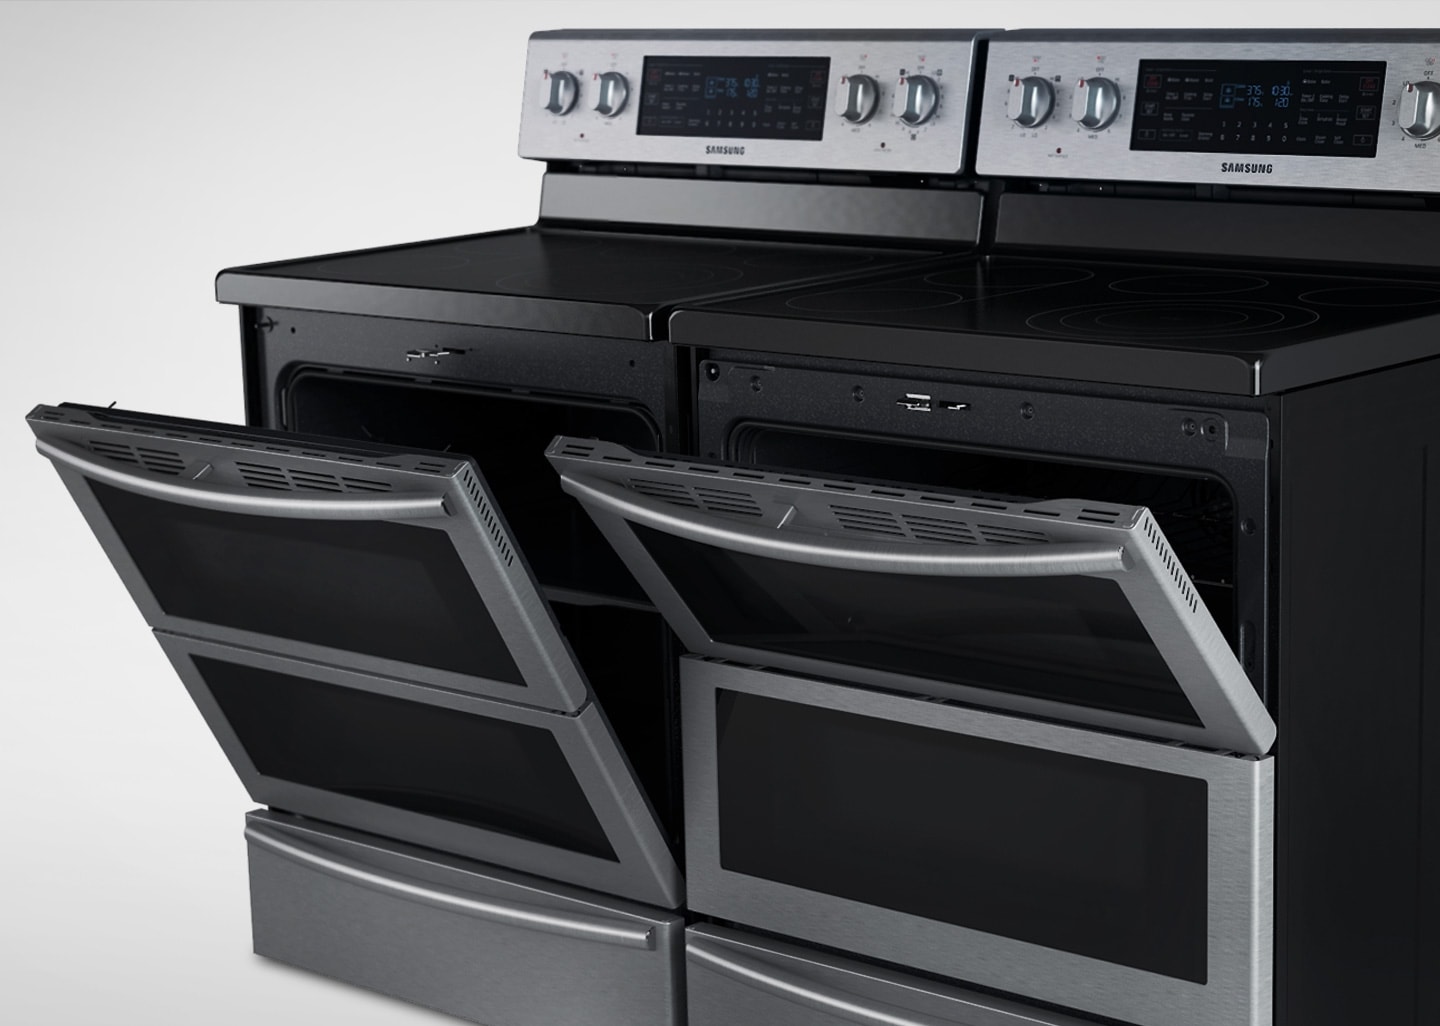 Easier, energy efficient oven access